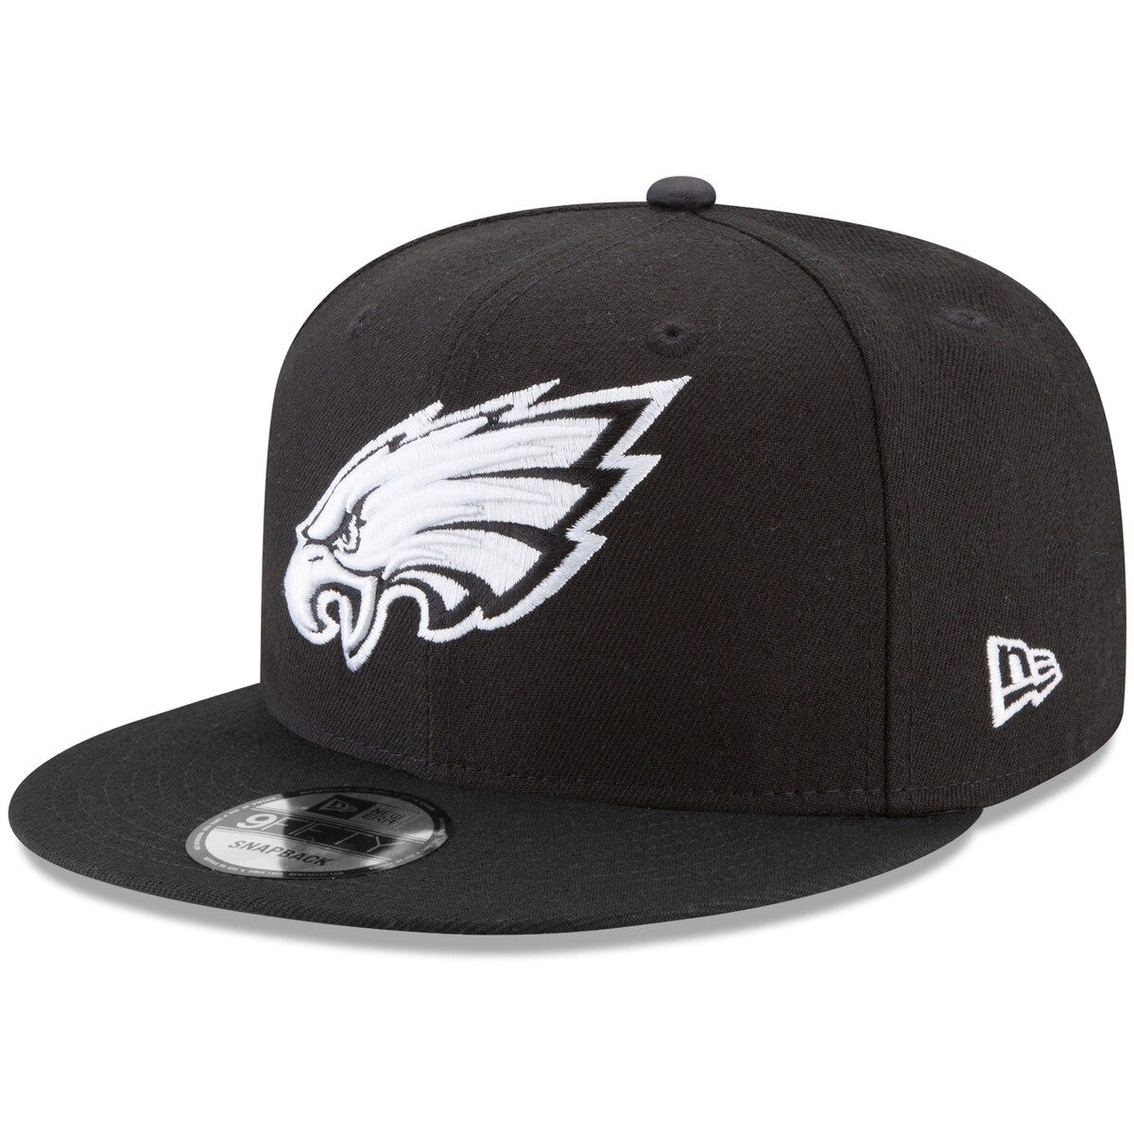 New Era Men's Black Philadelphia Eagles B-Dub 9FIFTY Adjustable Hat - Image 2 of 4